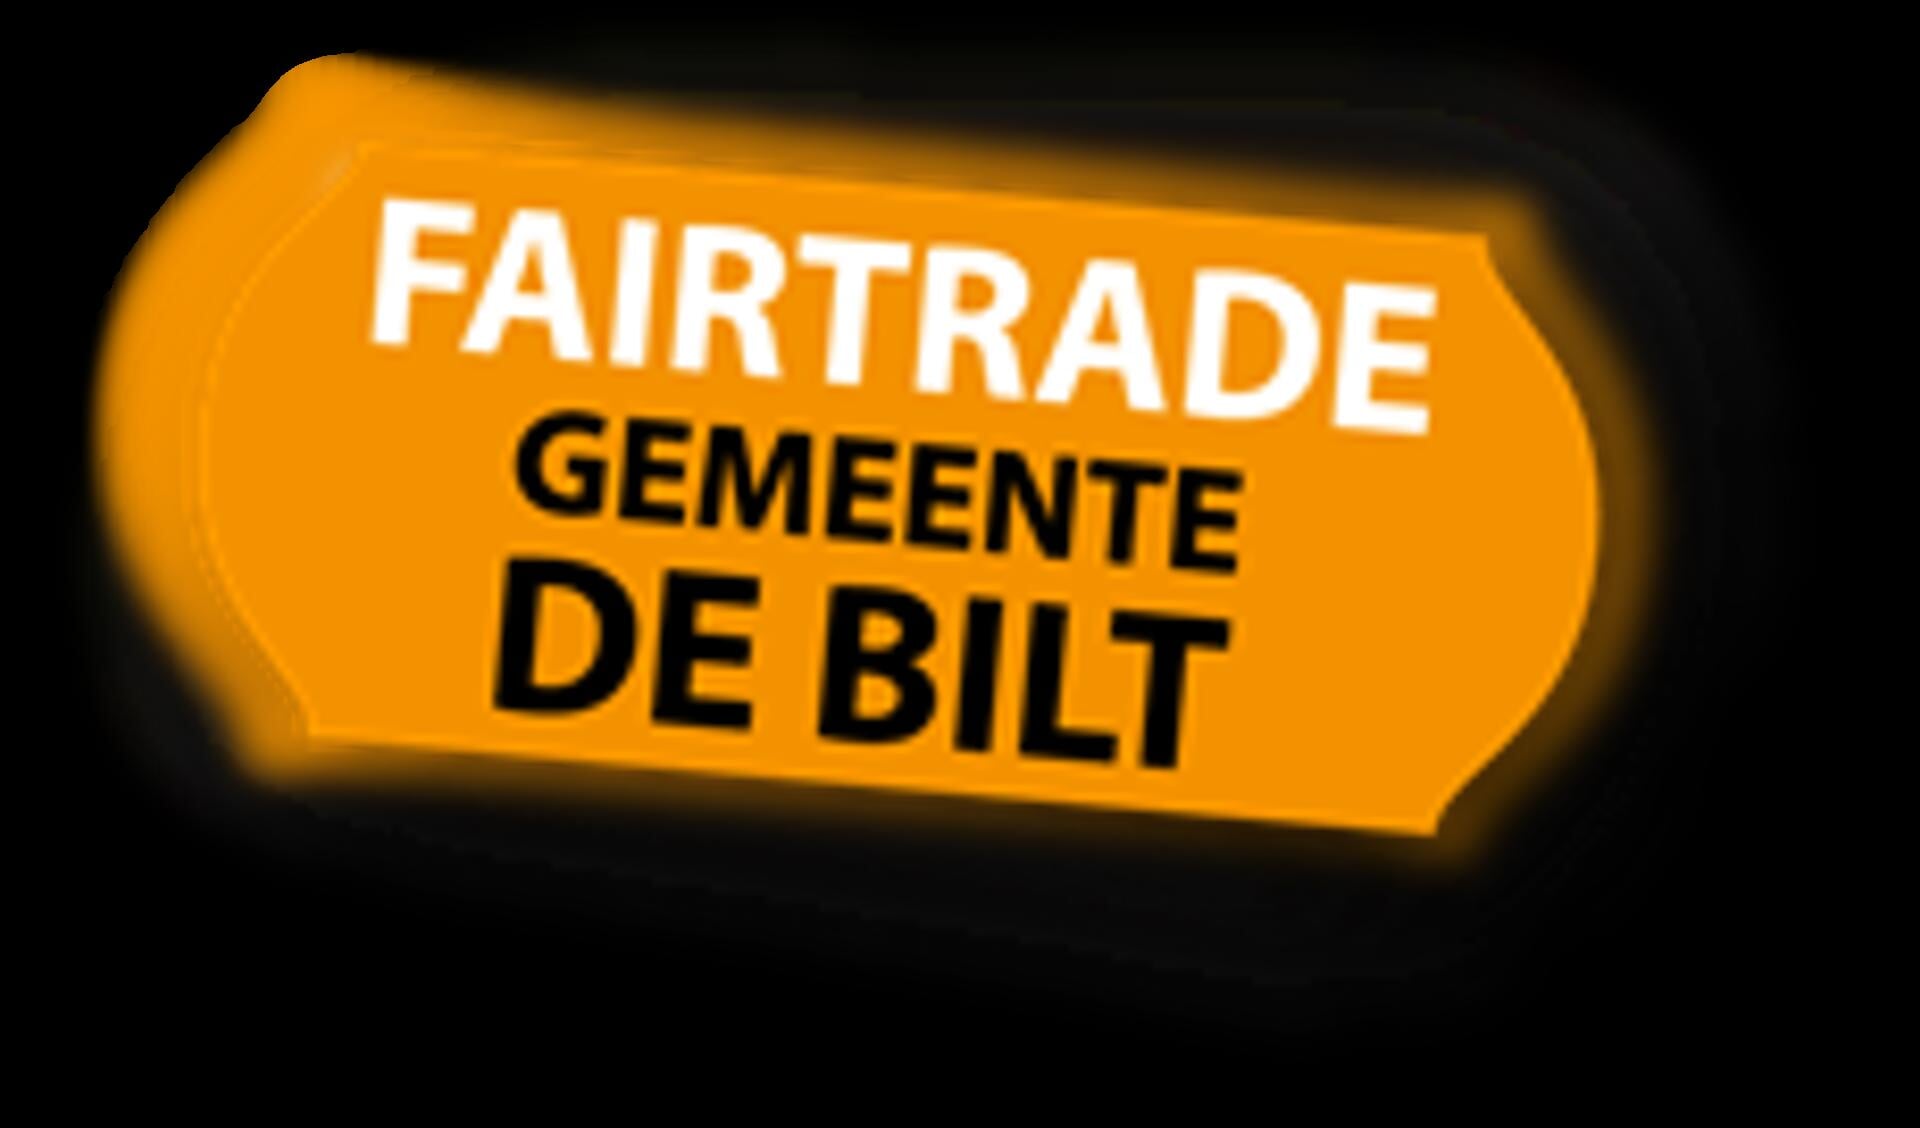 Fairtrade Gemeente De Bilt